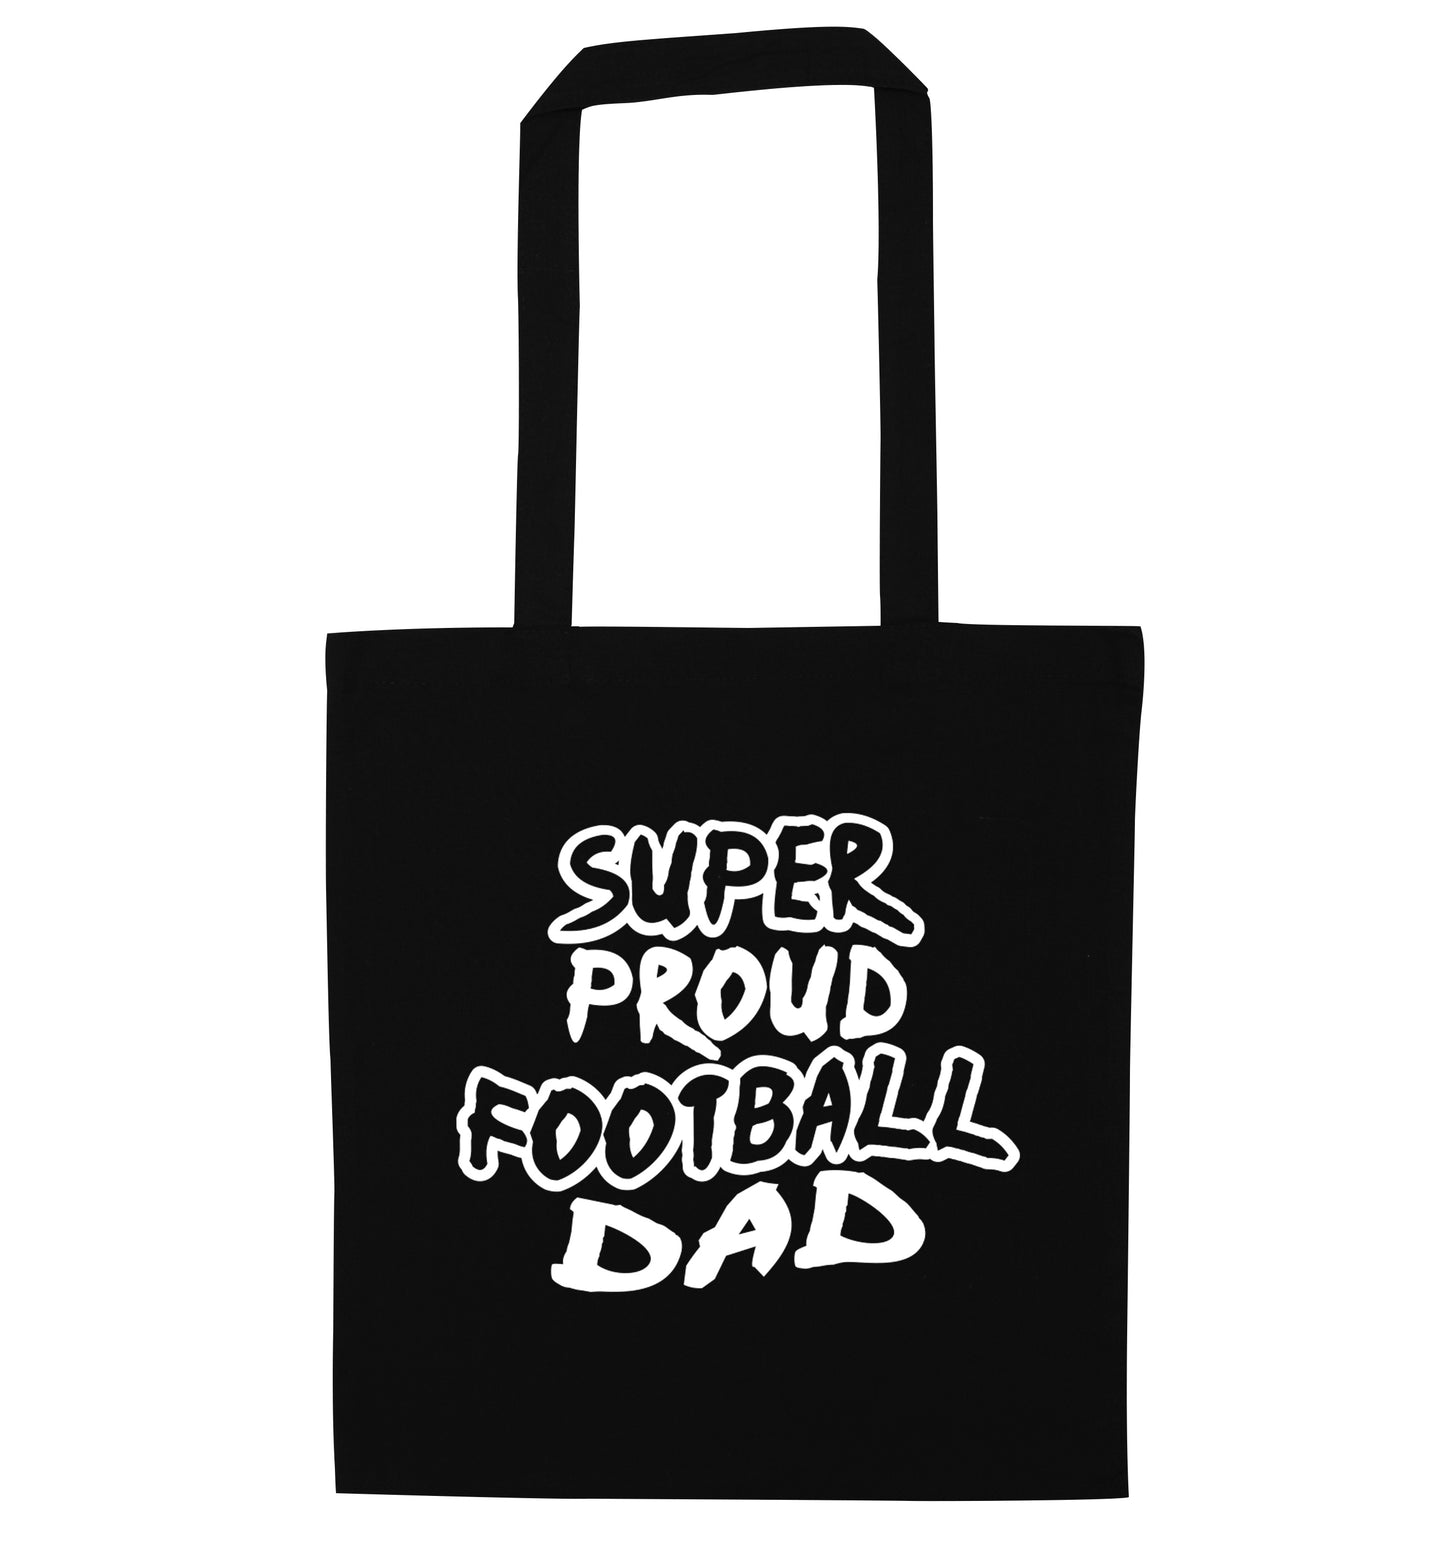 Super proud football dad black tote bag